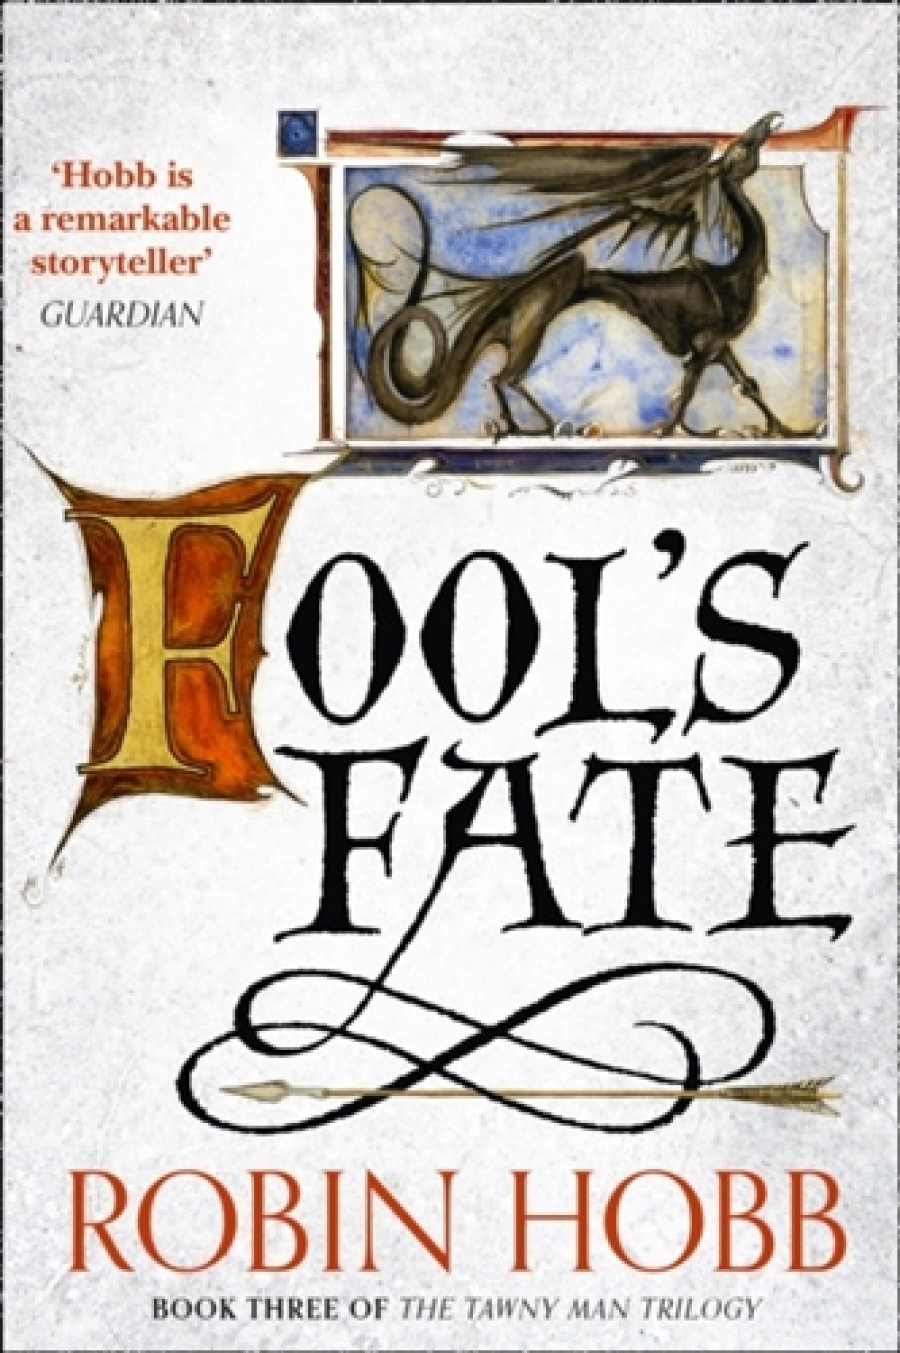 Robin, Hobb Fool's Fate (The Tawny Man Trilogy, Book 3) 